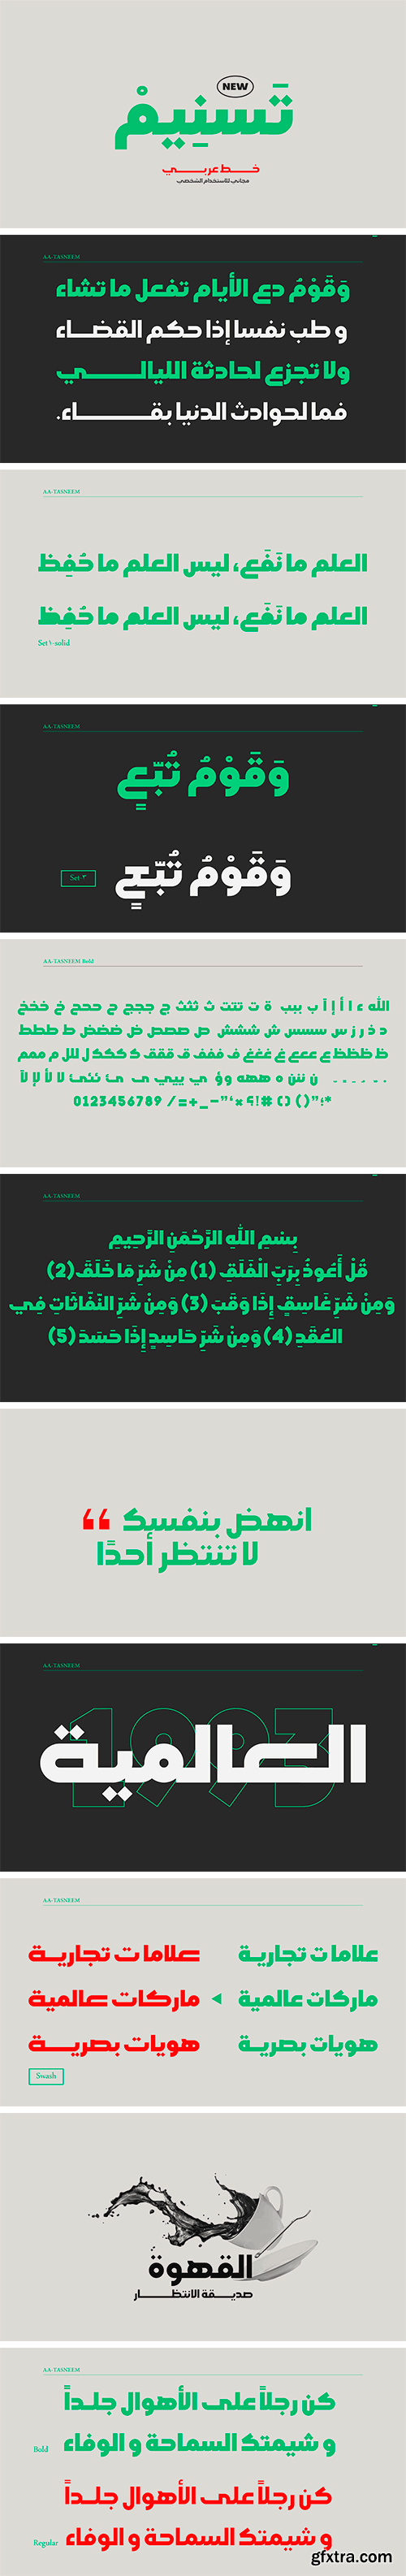 Tasneem Arabic Typeface